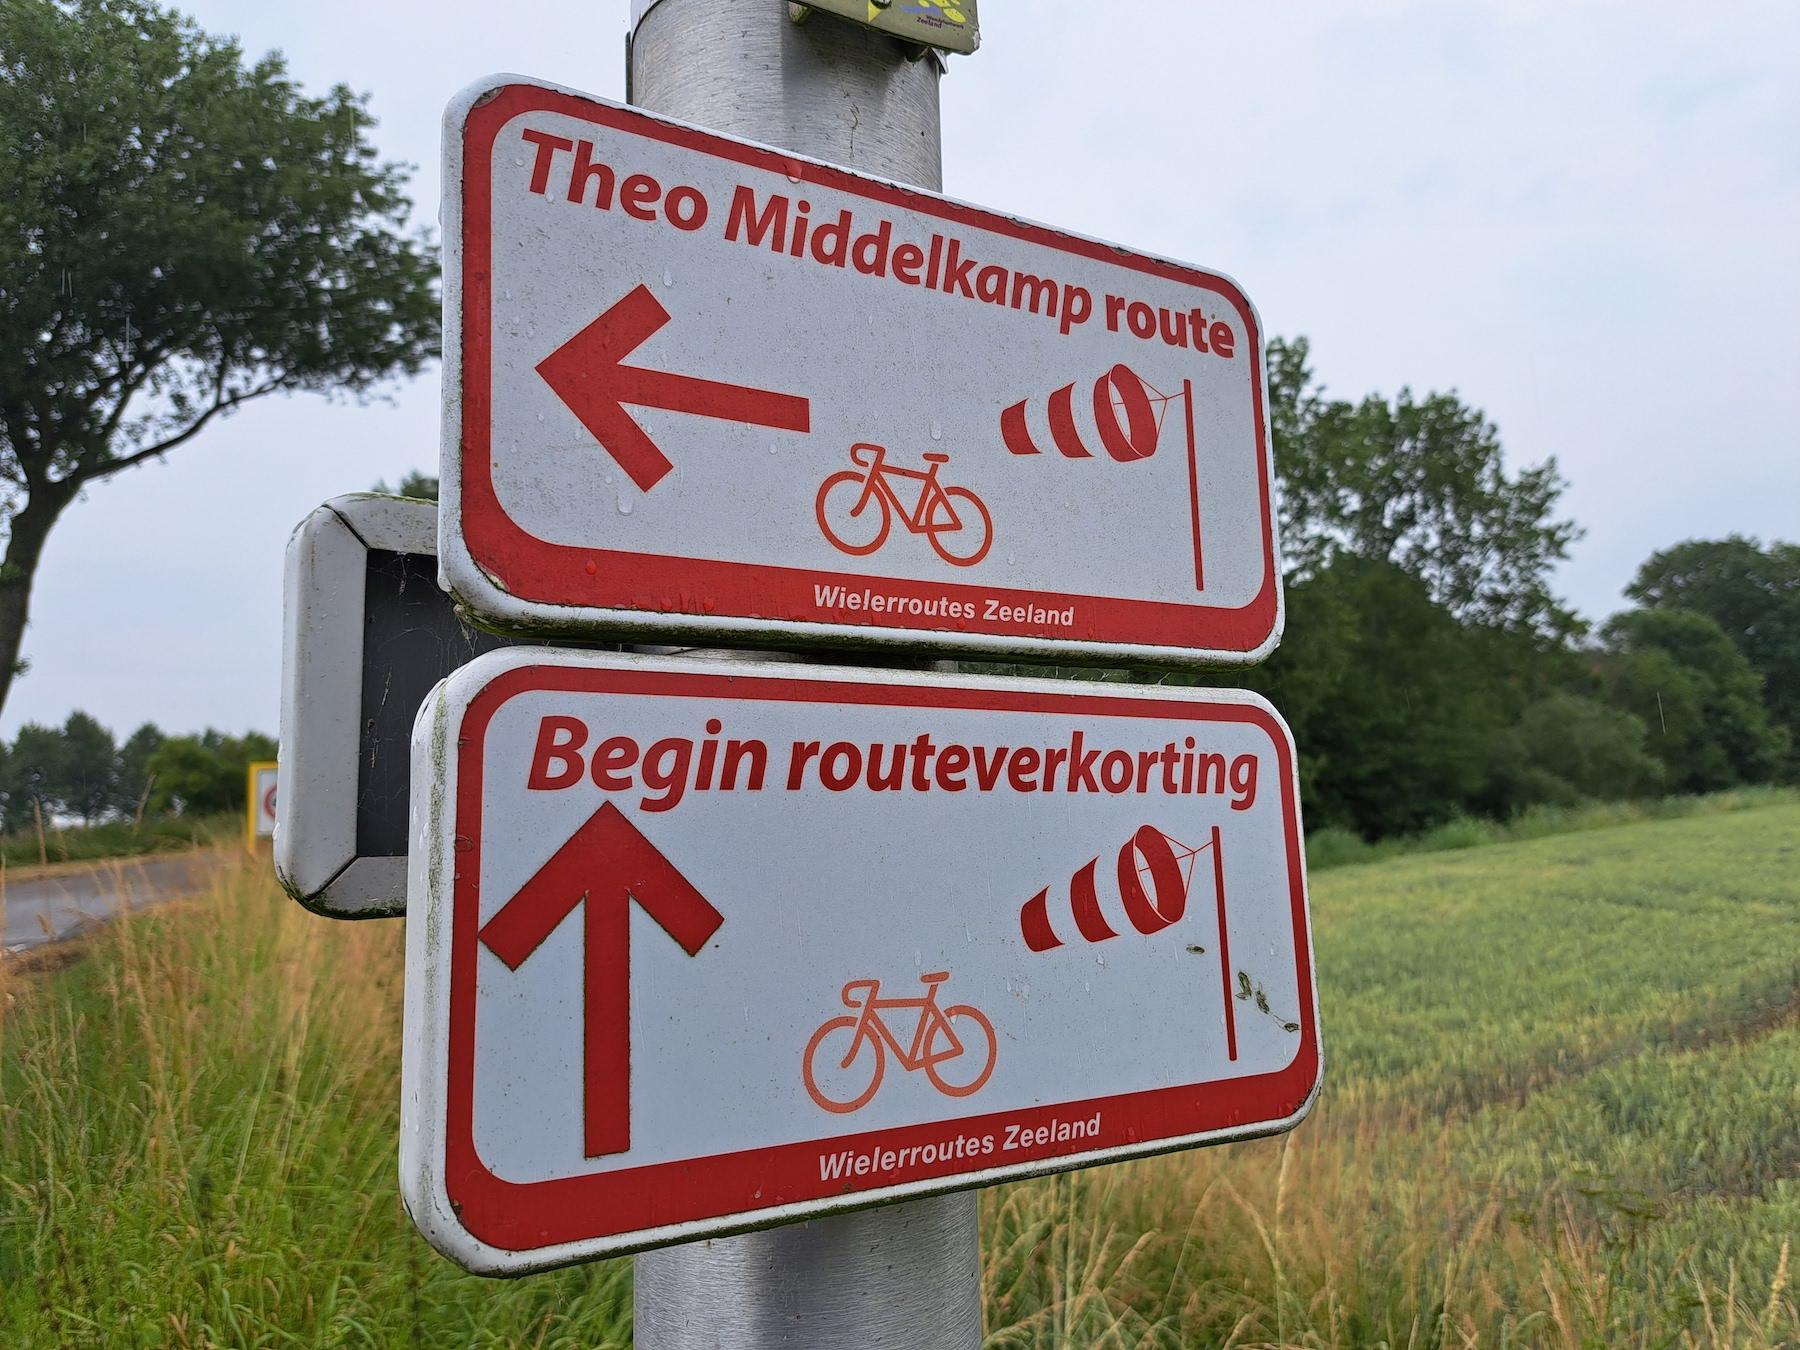 Theo Middelkamp route